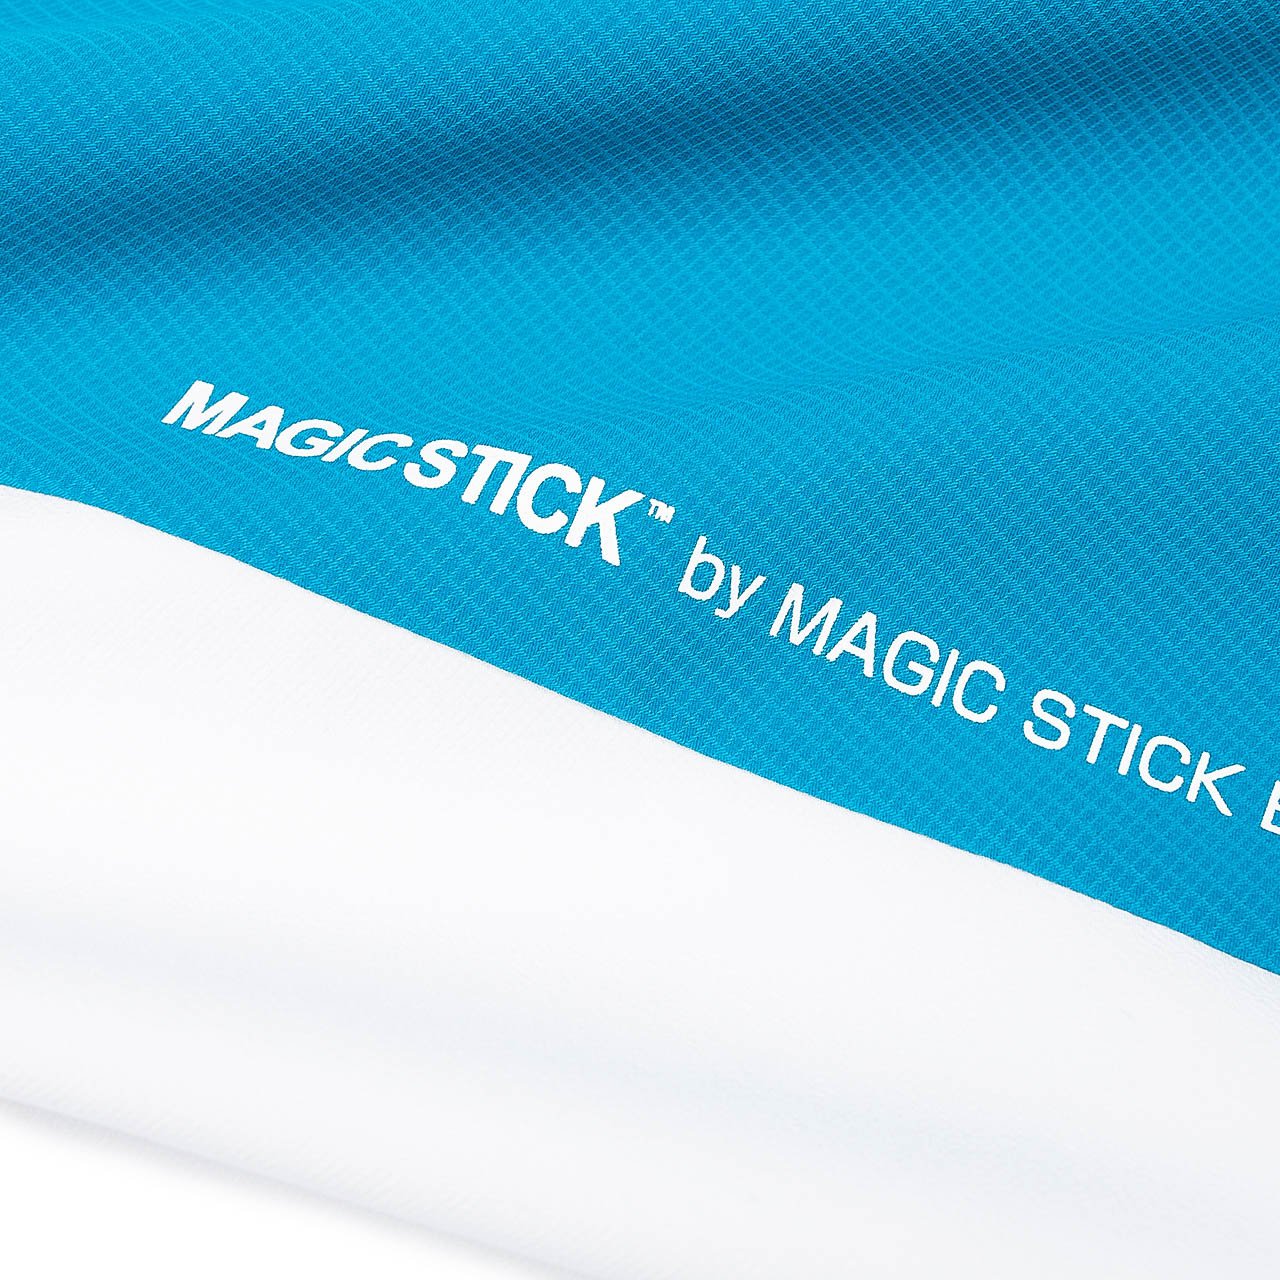 magic stick 3 pallets tennis jersey (white) - 19fw-ms8-025 - a.plus - Image - 5